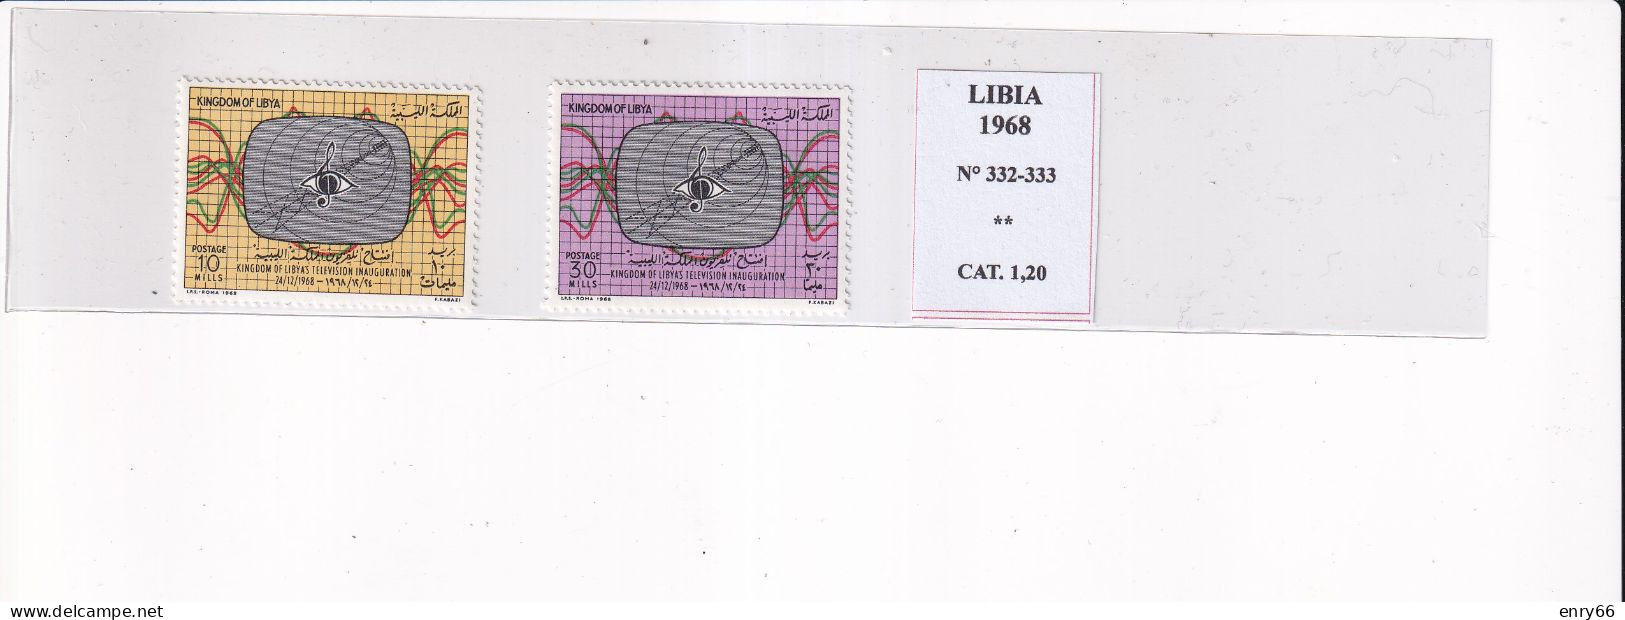 LIBIA 1968 N°332-333 MNH - Libia